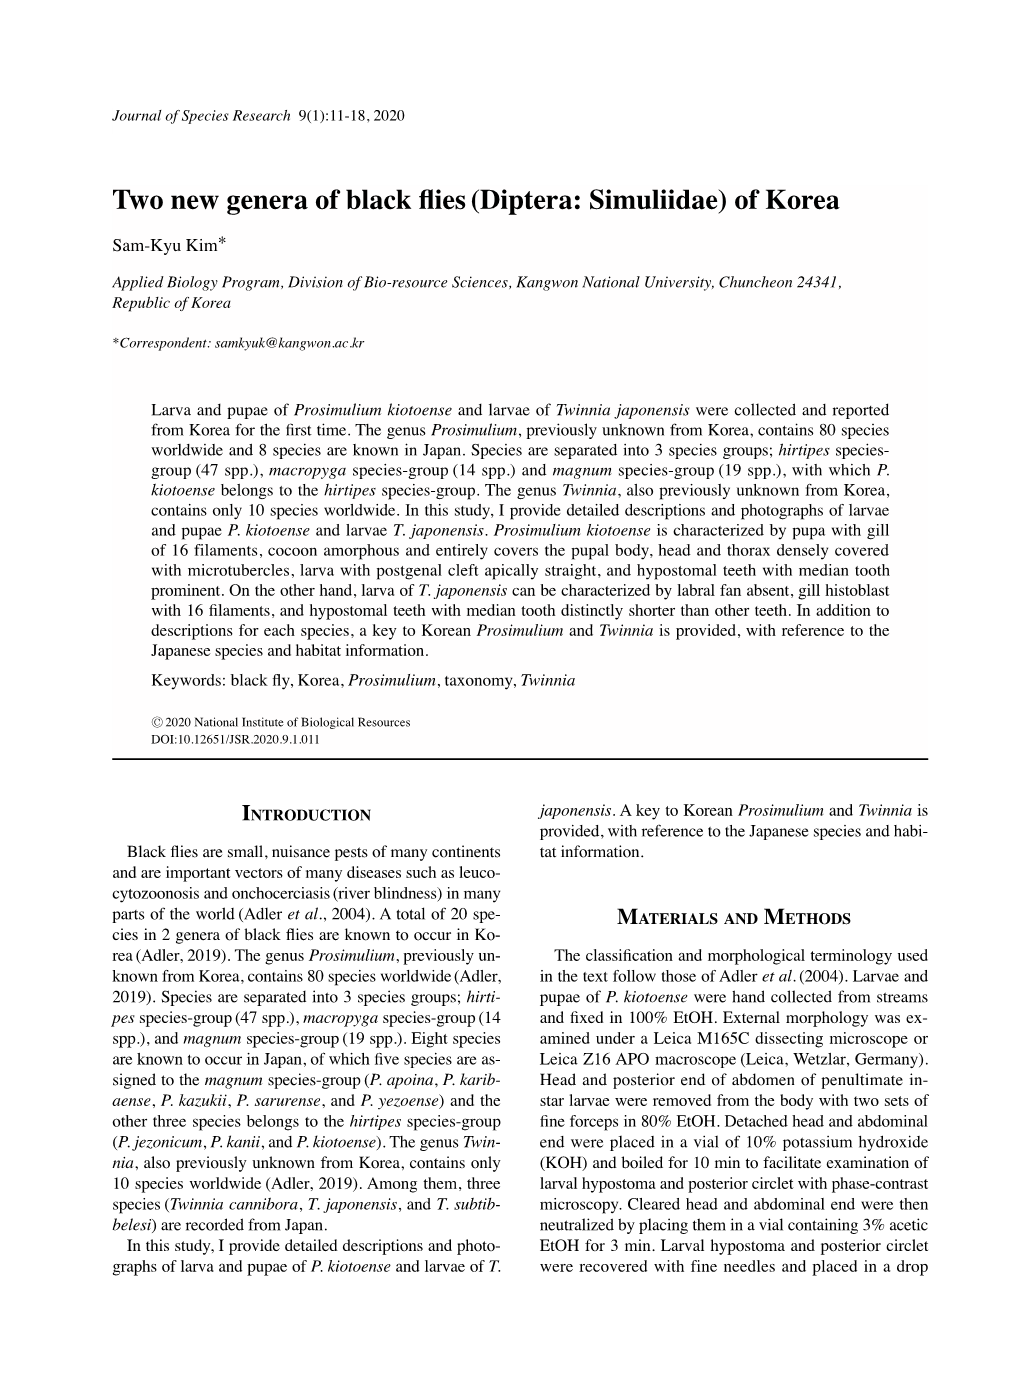 Two New Genera of Black Flies(Diptera: Simuliidae) of Korea